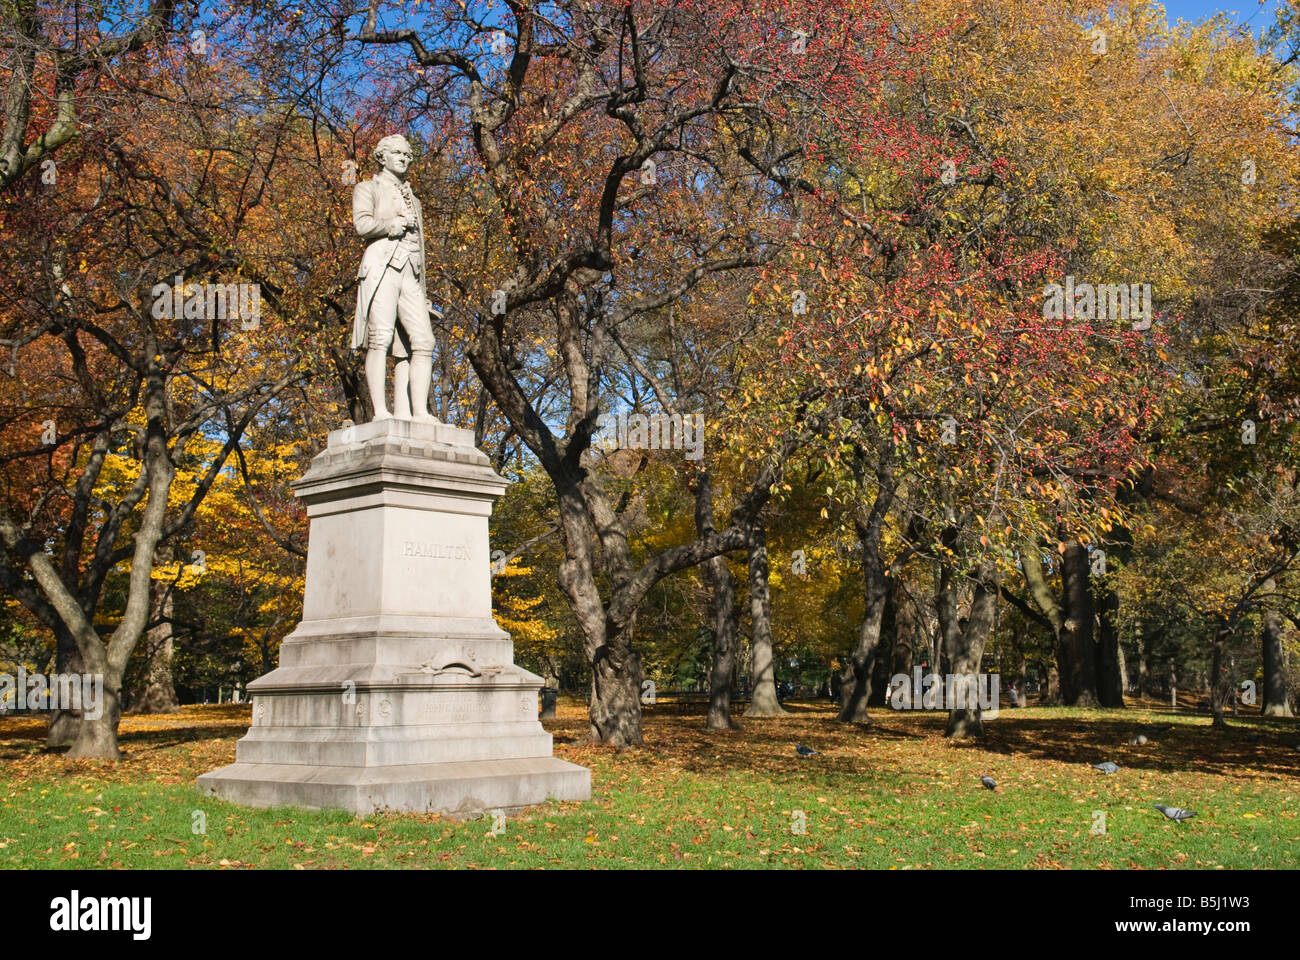 Statue of Alexander Hamilton in Central Park, New York City Stock Photo